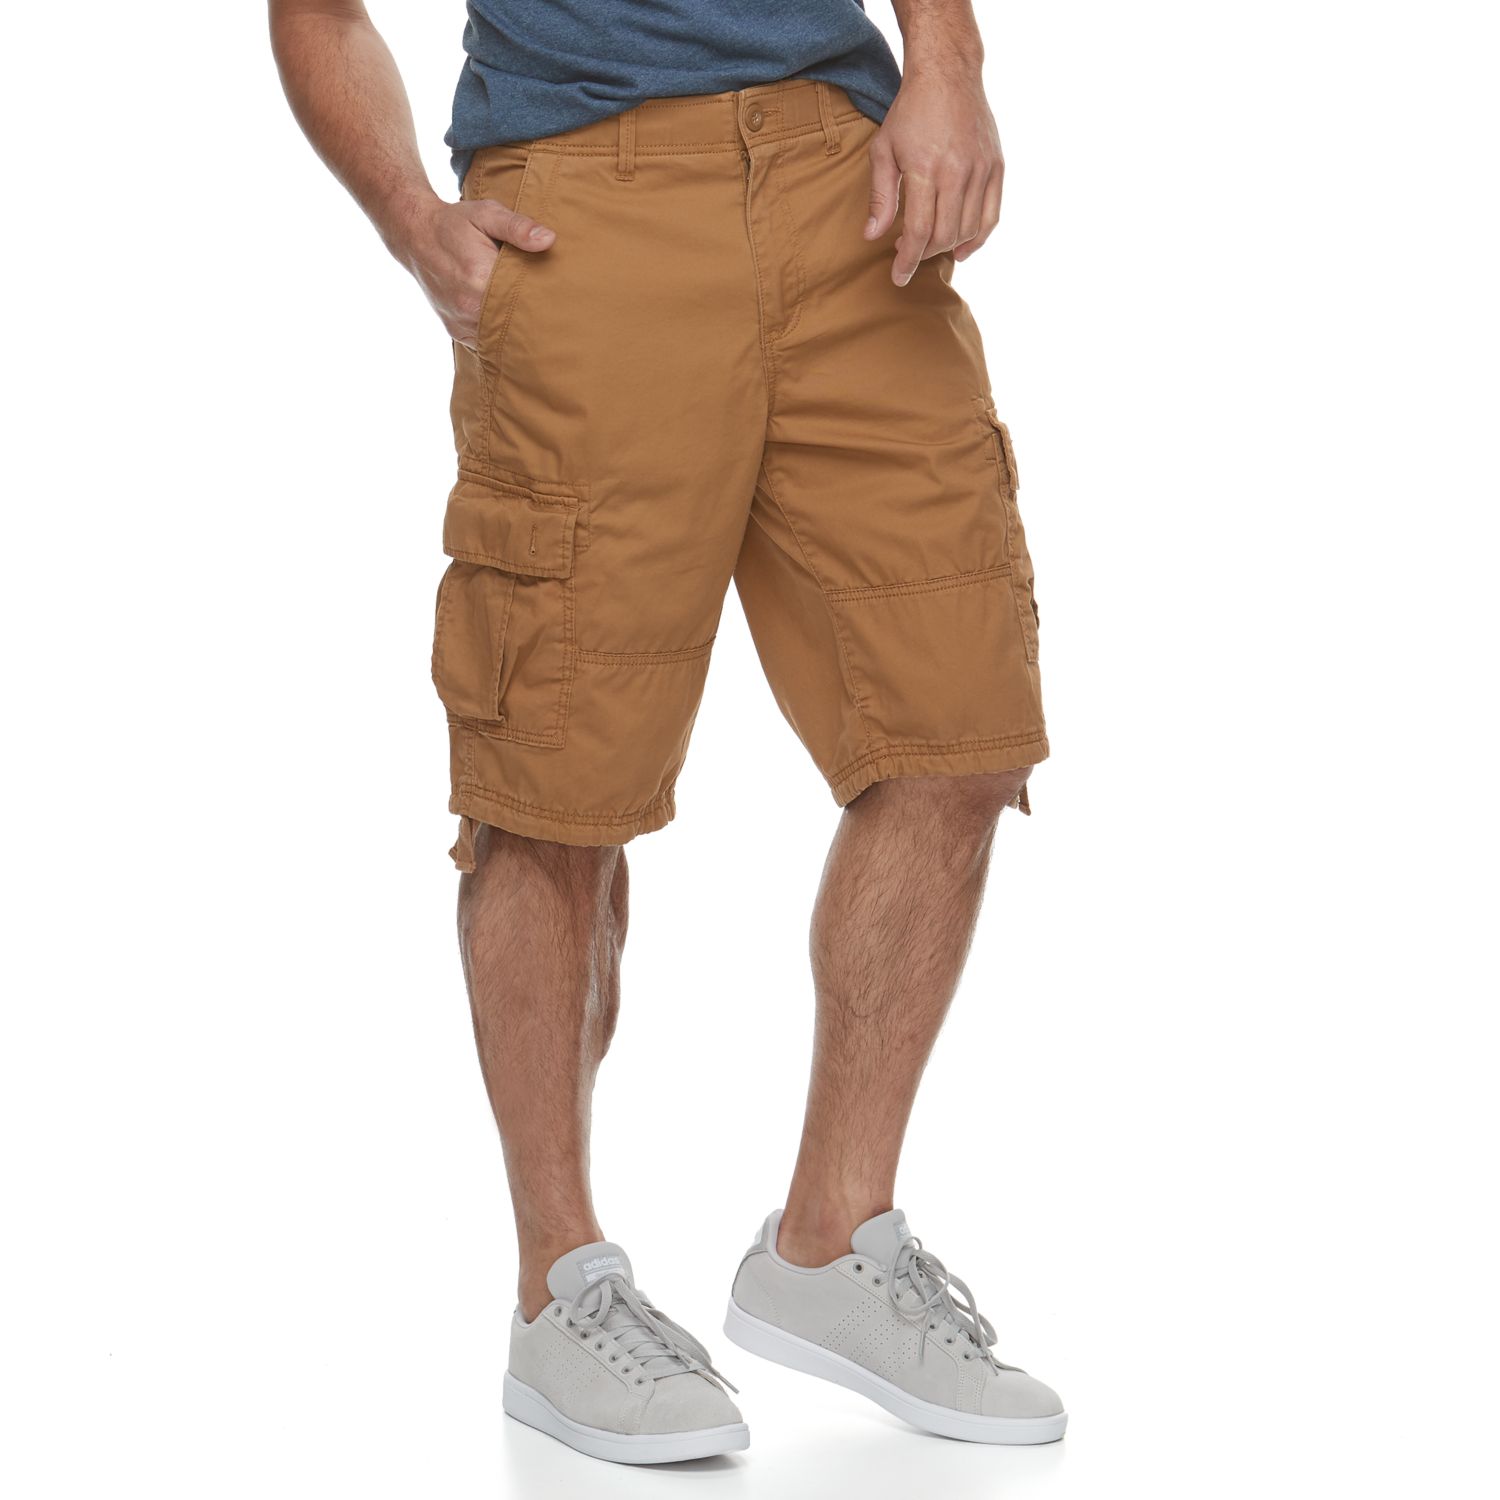 urban max flex shorts